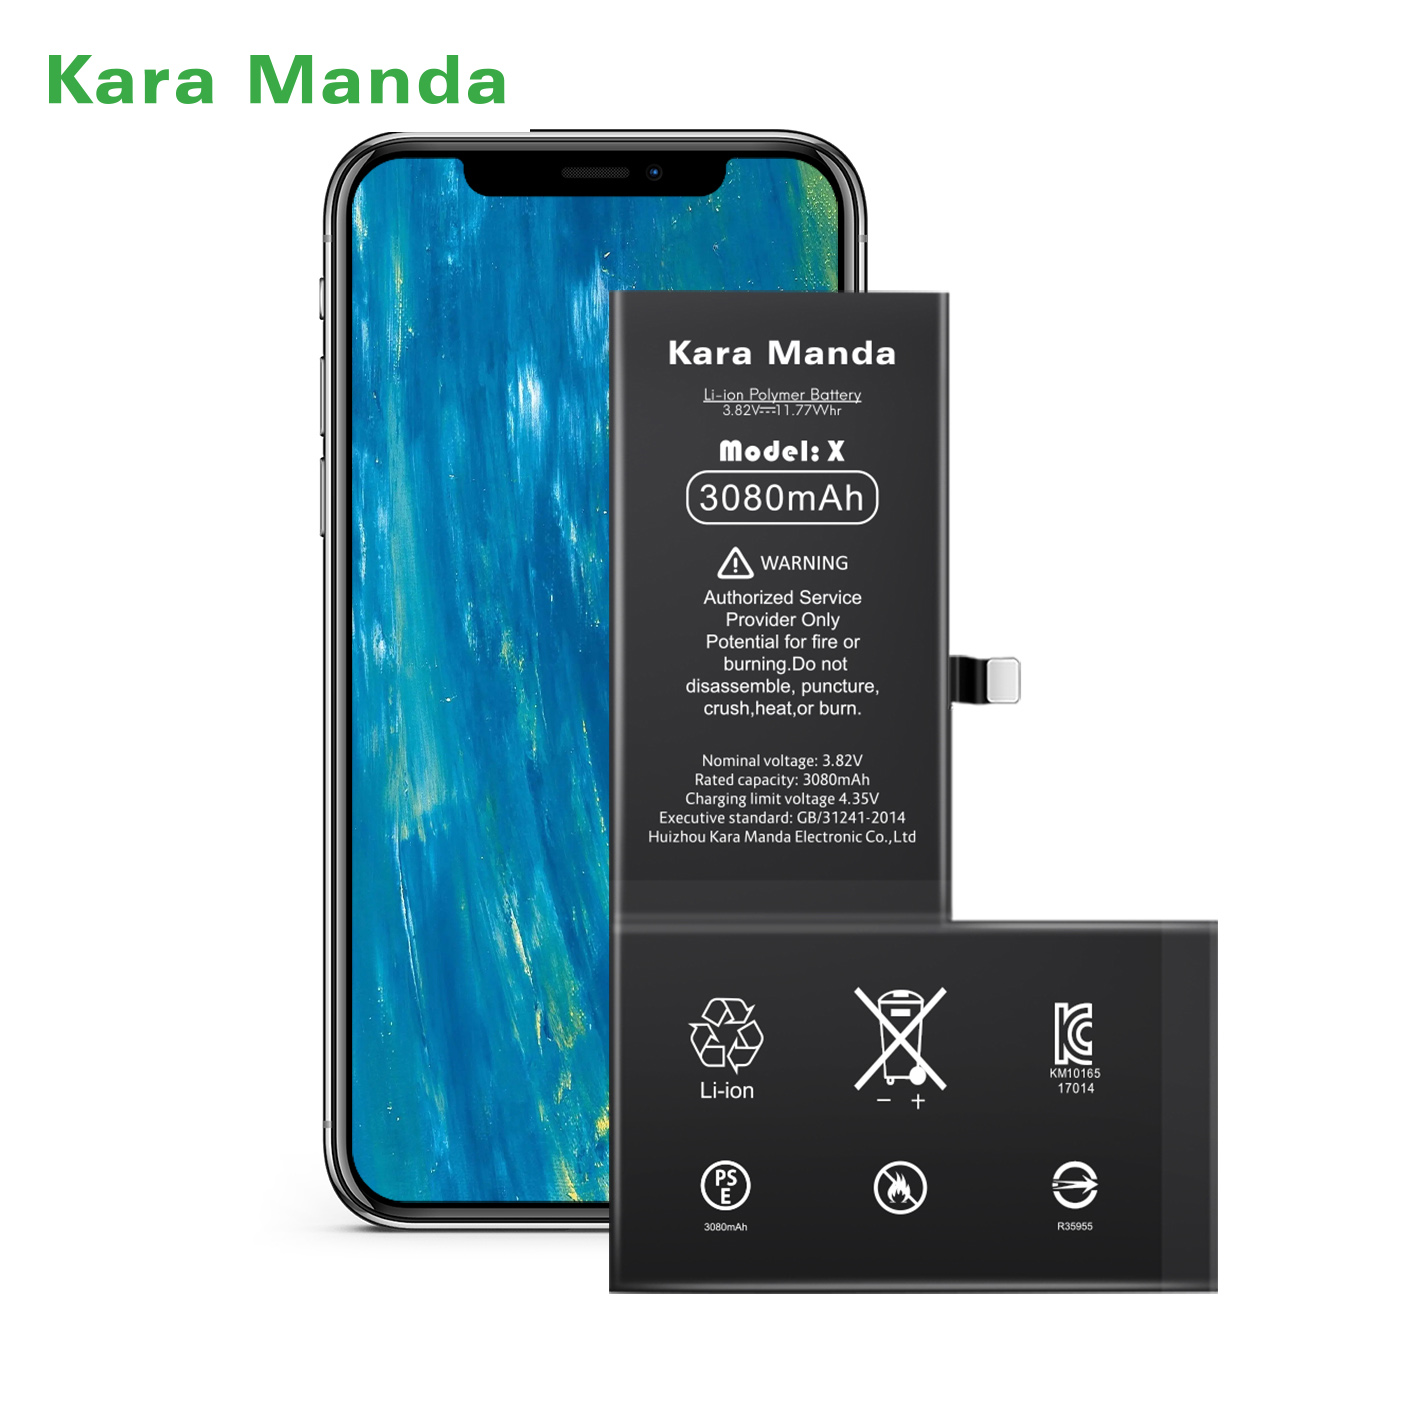 Factory Direct iPhone X Replacement Battery - Wholesale High Capacity 3080mAh - Kara Manda